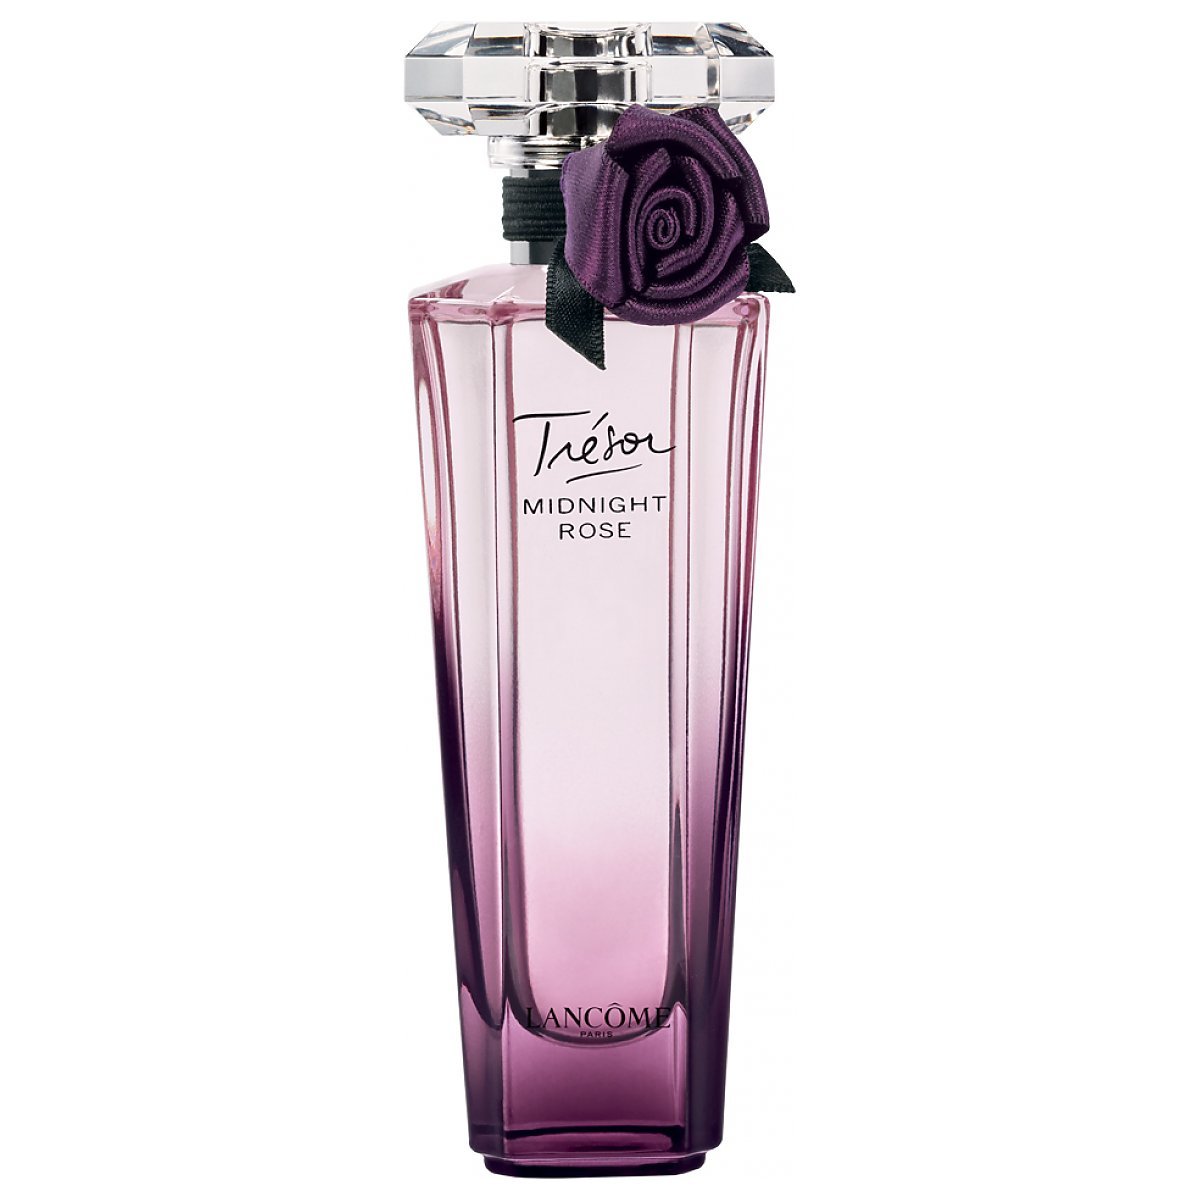 Zdjęcia - Perfuma damska Lancome , Tresor Midnight Rose, woda perfumowana, 75 ml 